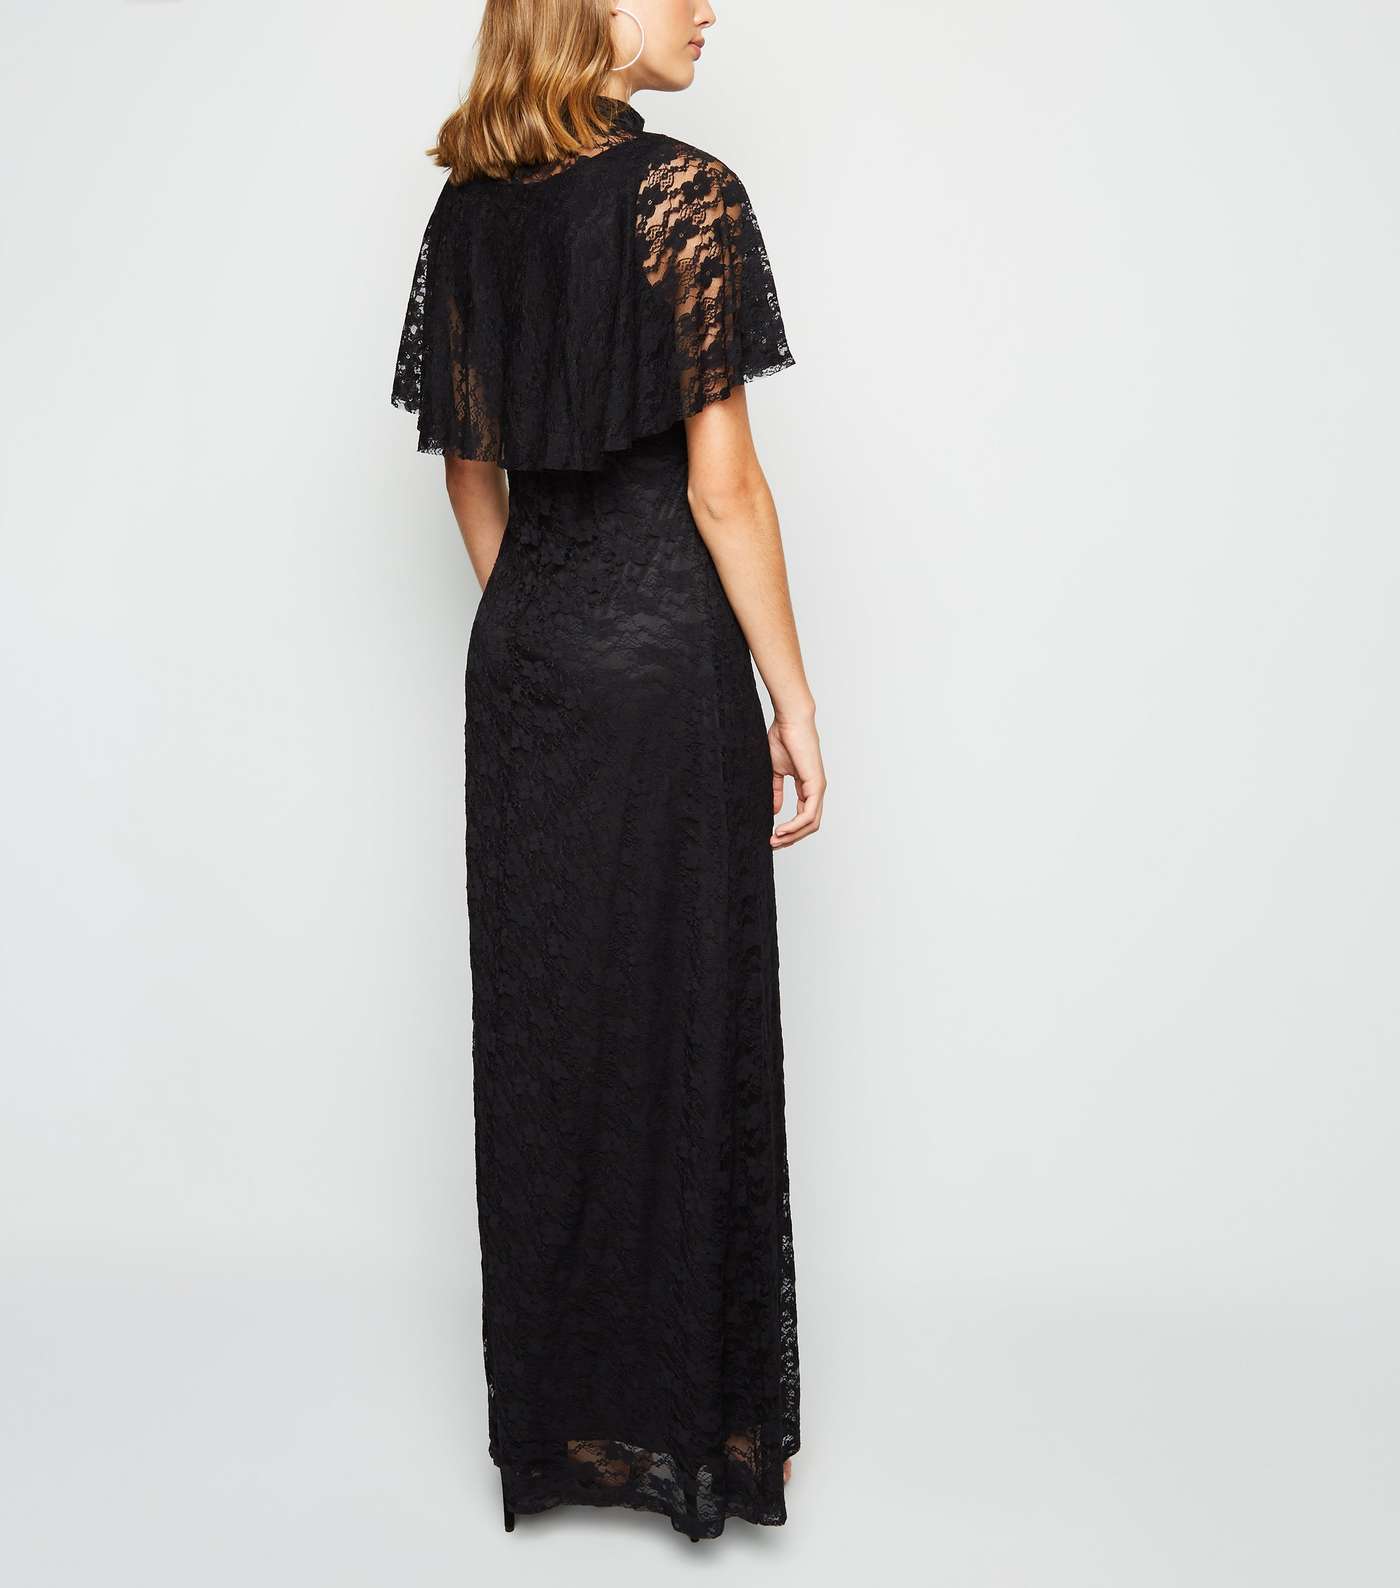 Mela Black Lace High Neck Maxi Dress Image 3